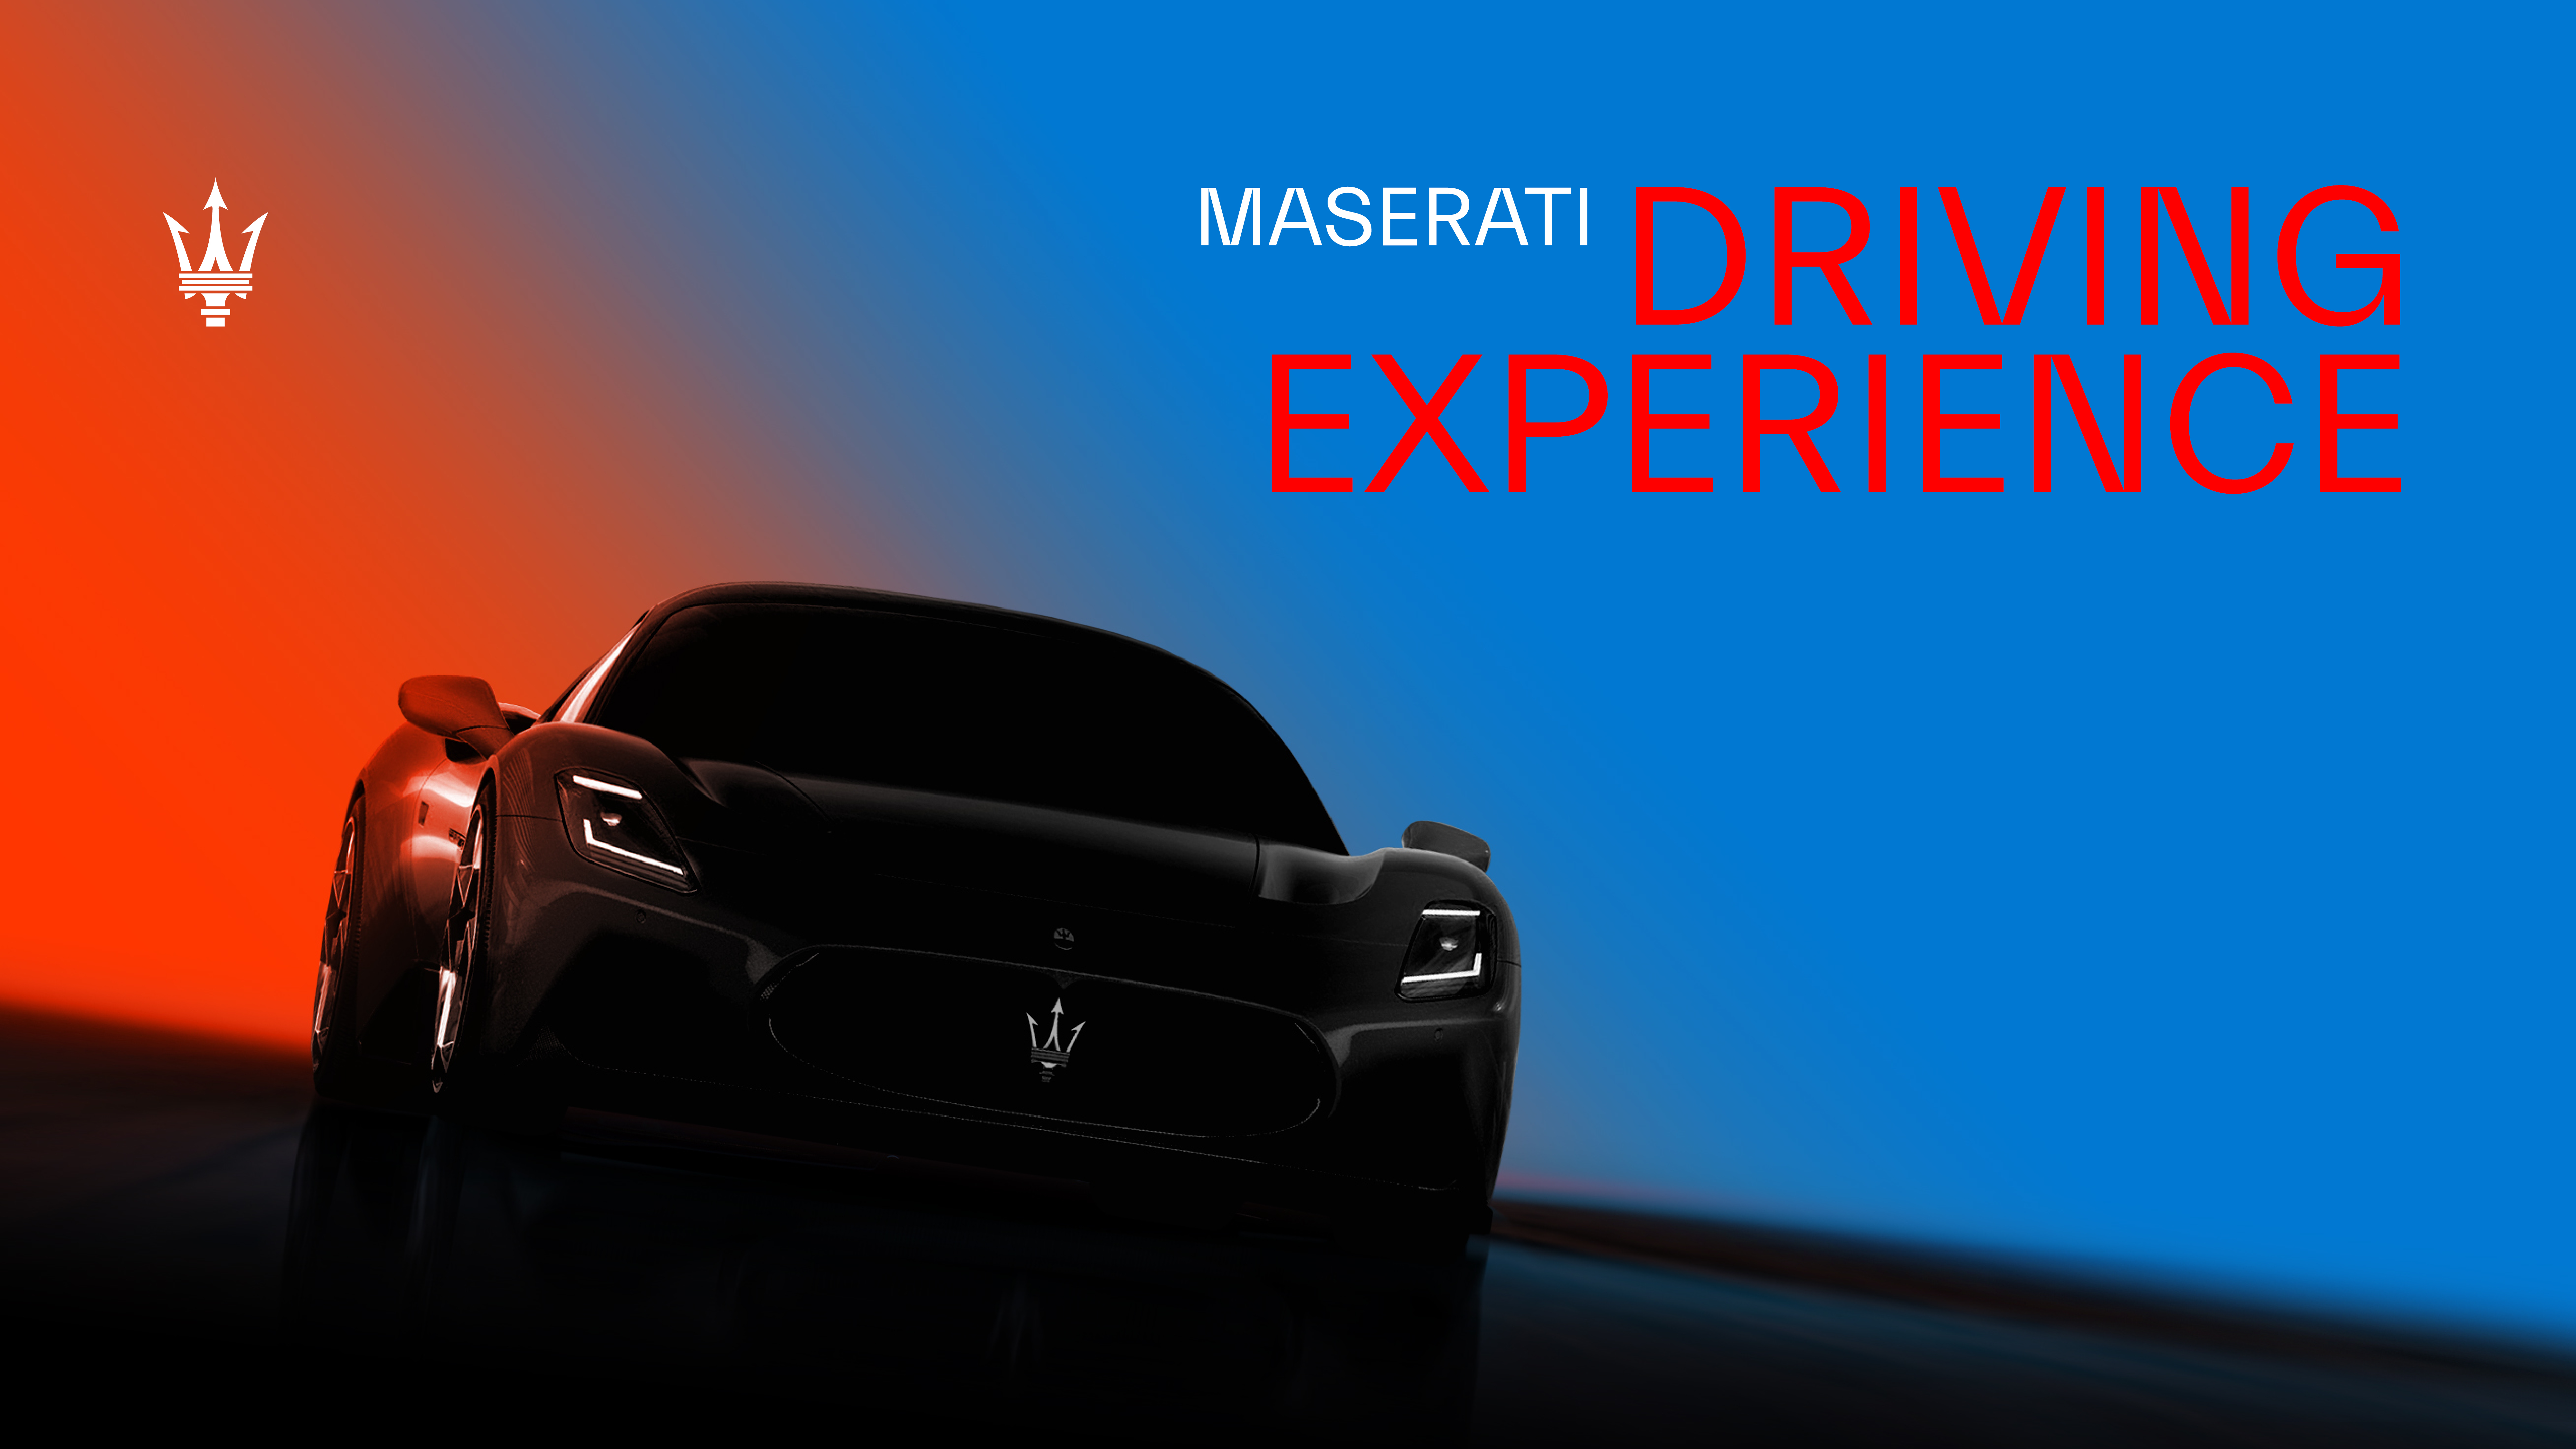 MASERATI – Master Driving Experience